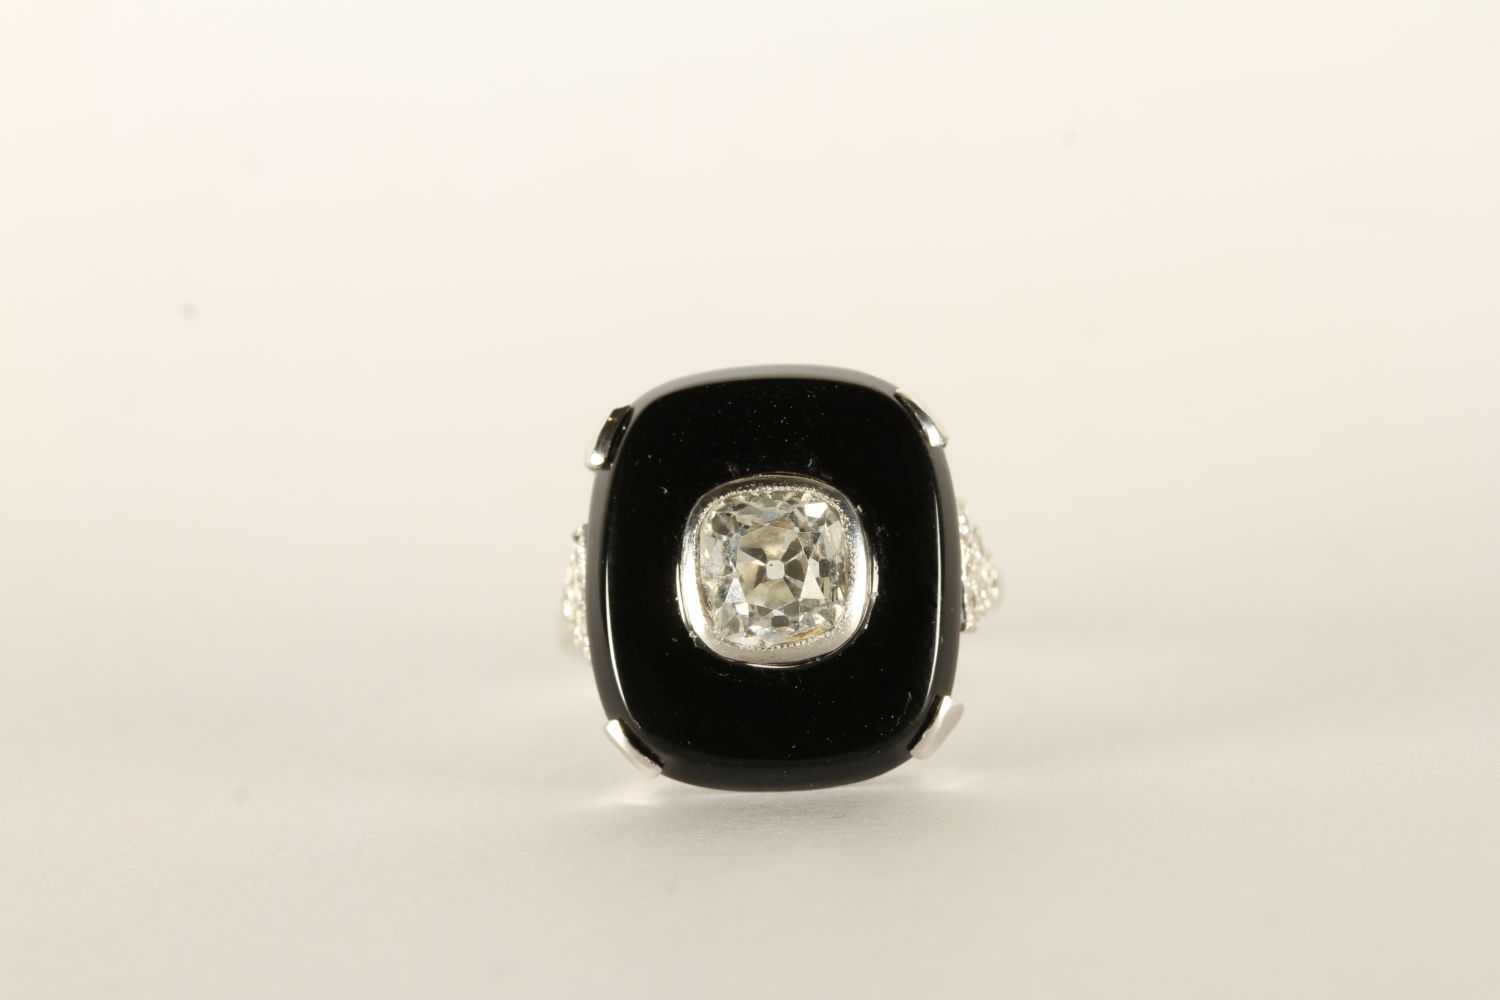 Art Deco Onyx And Diamond Dress Ring, feature cushion cut diamond, estimated weight 1.22ct, set